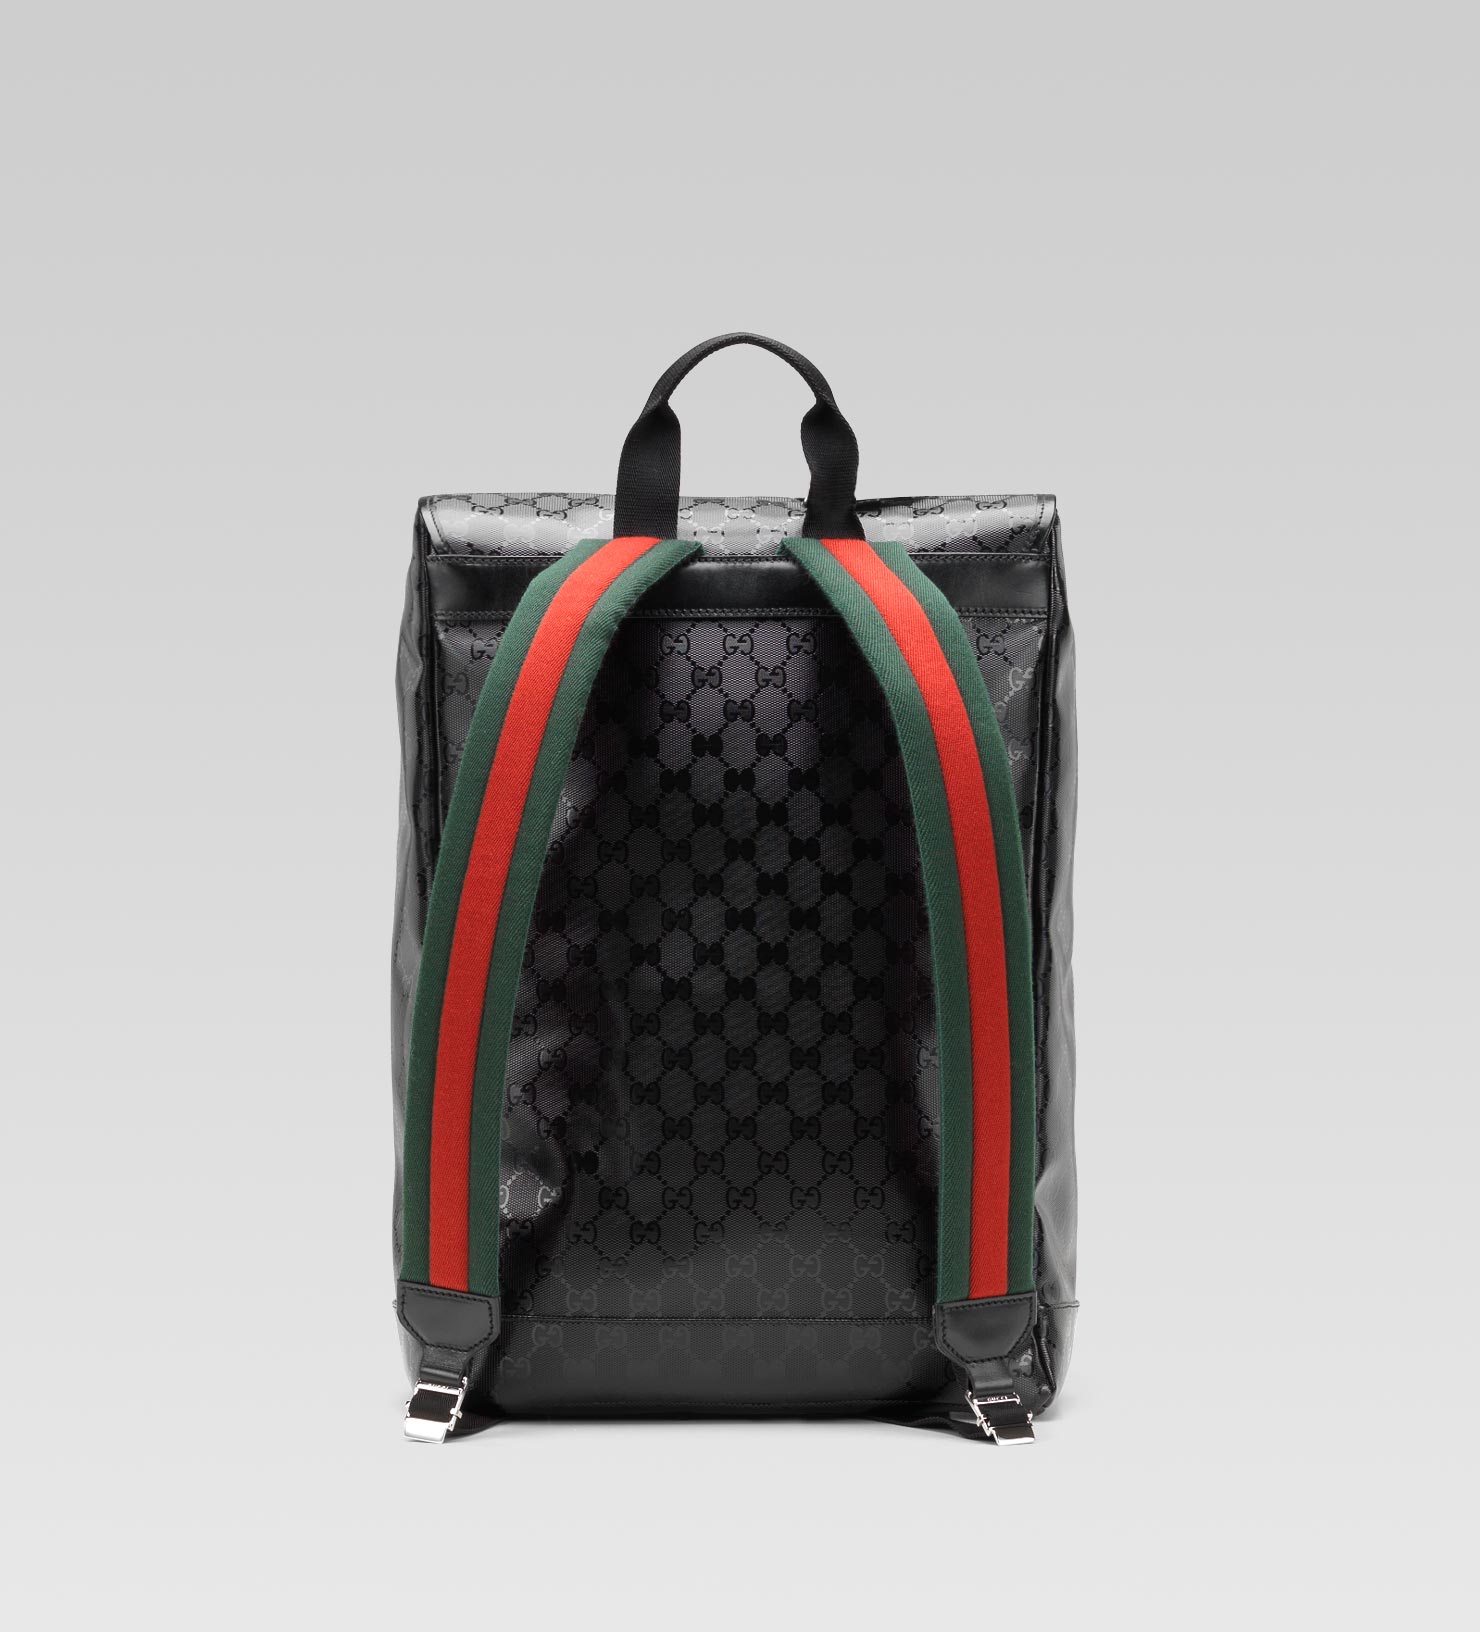 Lyst - Gucci Backpack in Black for Men